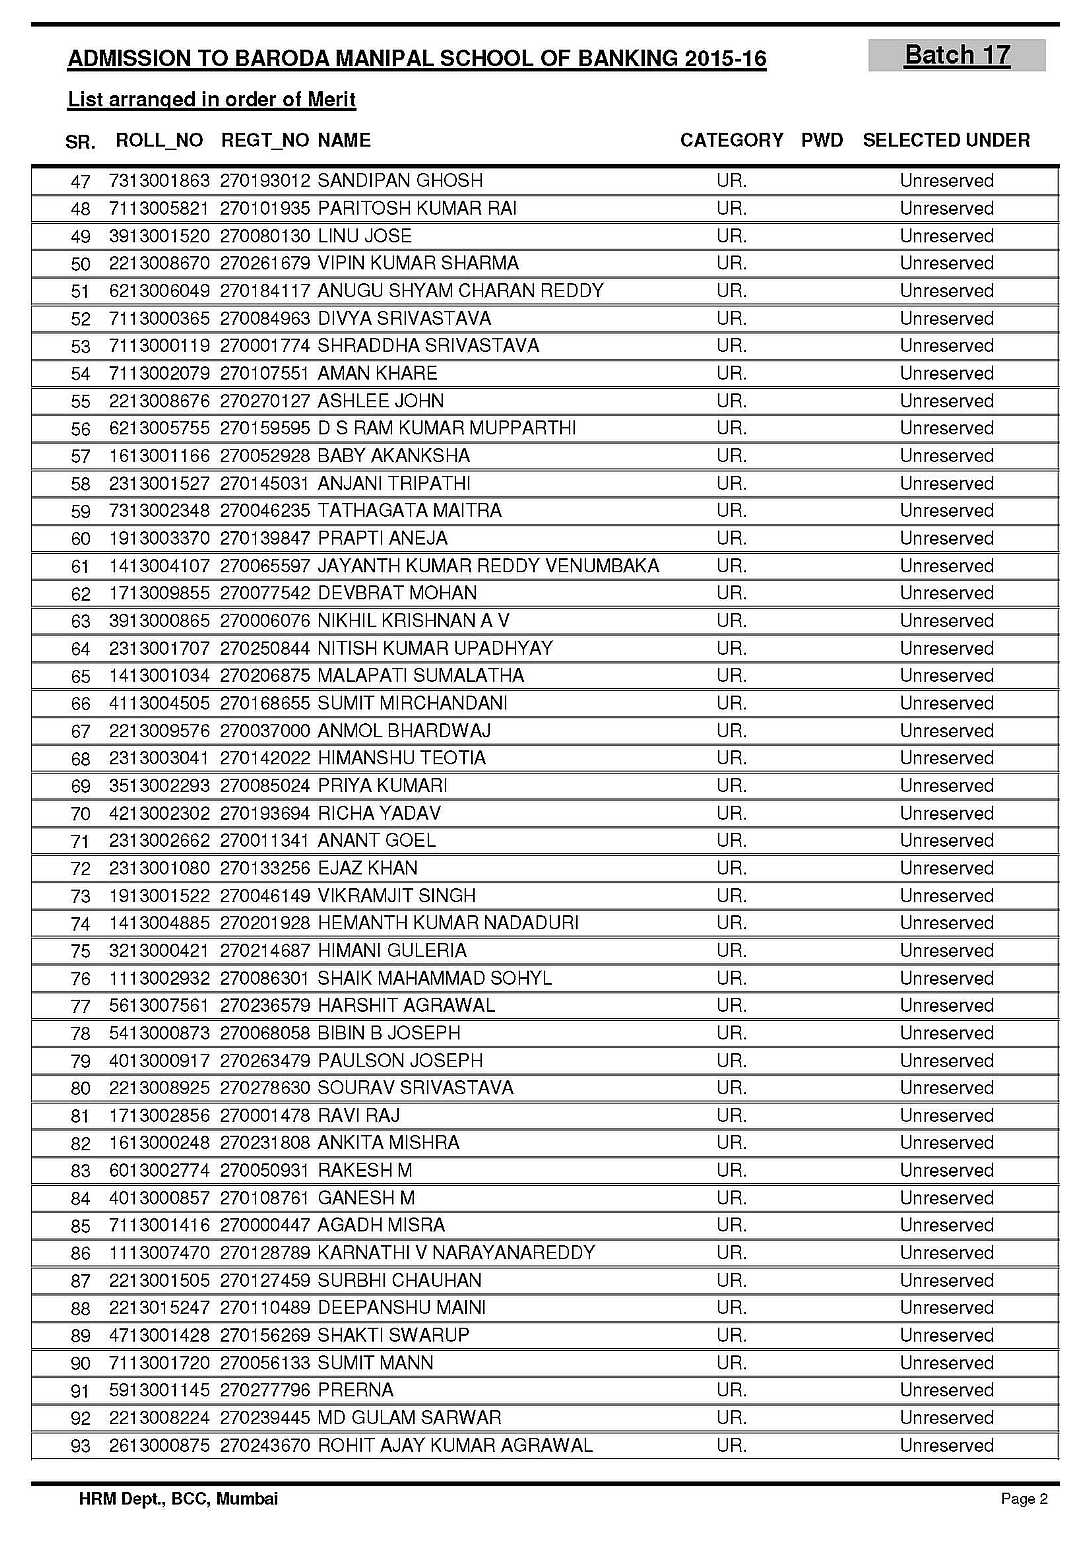 bank of baroda manipal school of banking result 2014-15